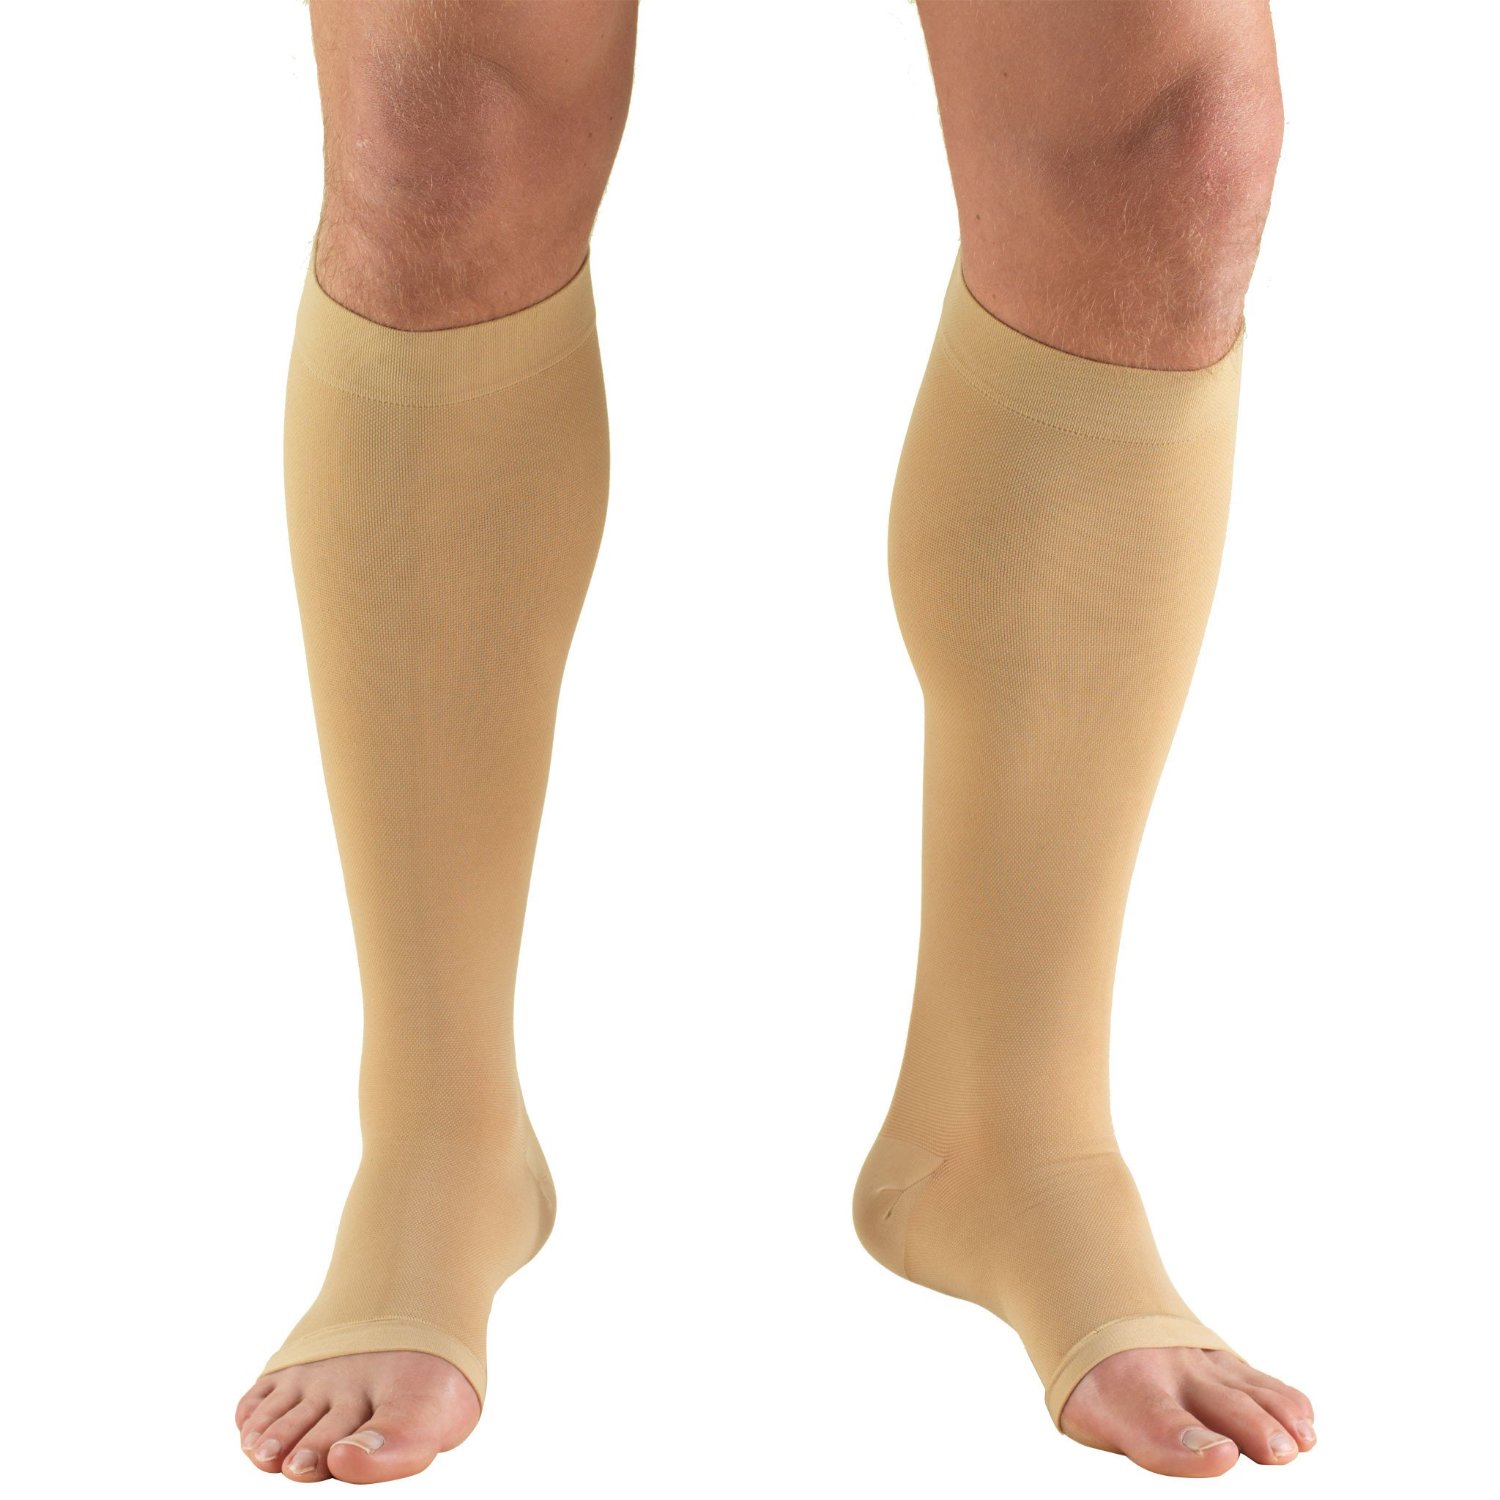 Knee High Open Toe Stockings - Unisex